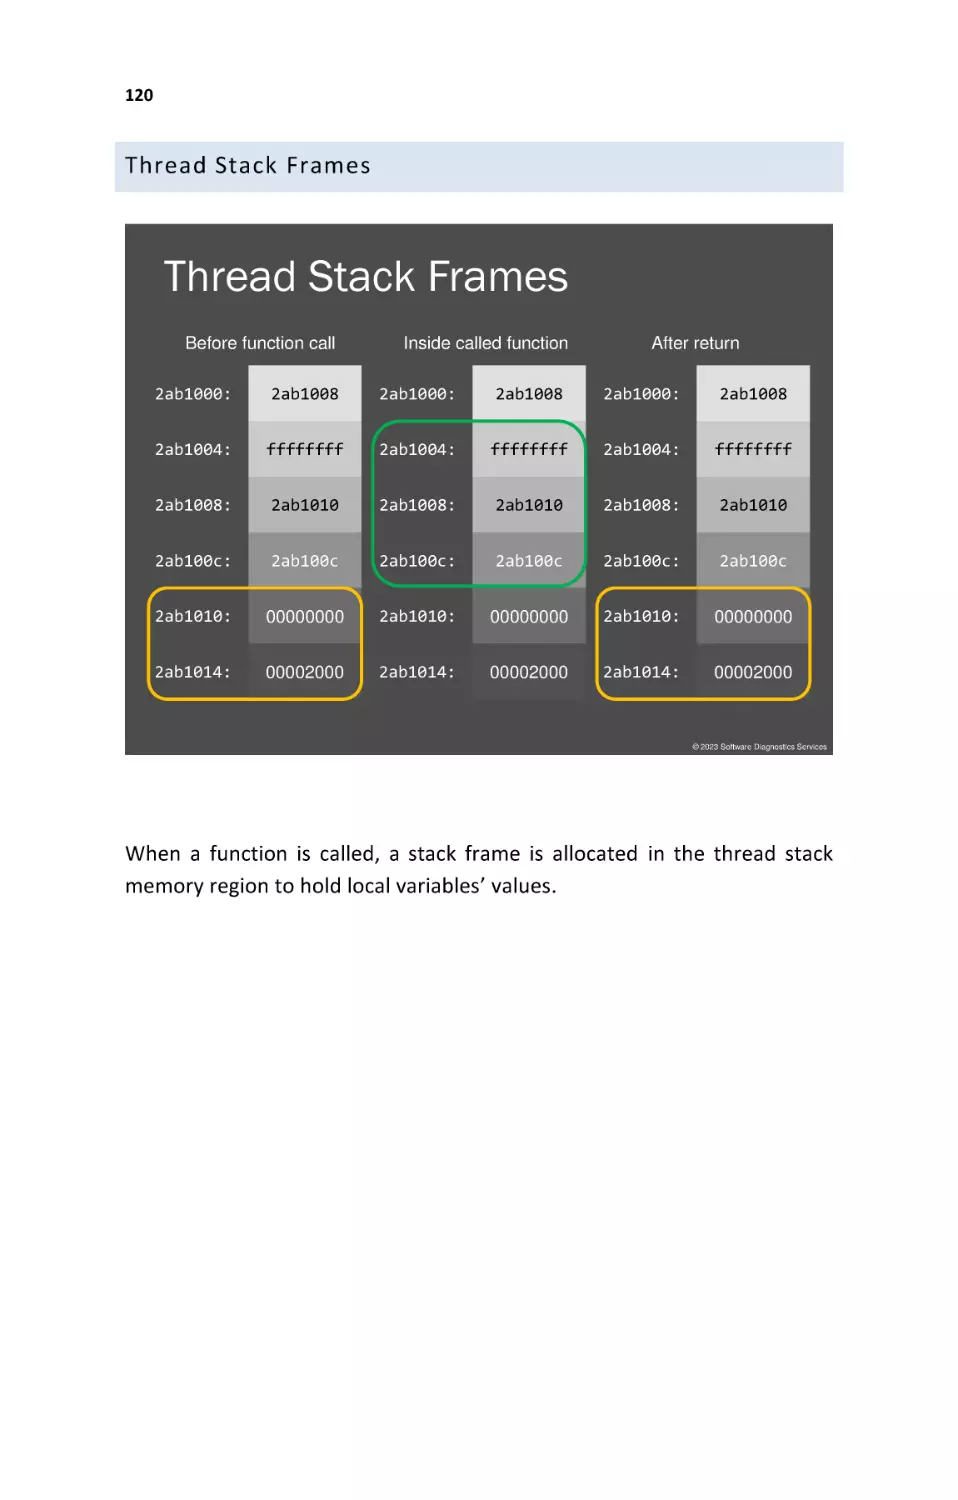 Thread Stack Frames